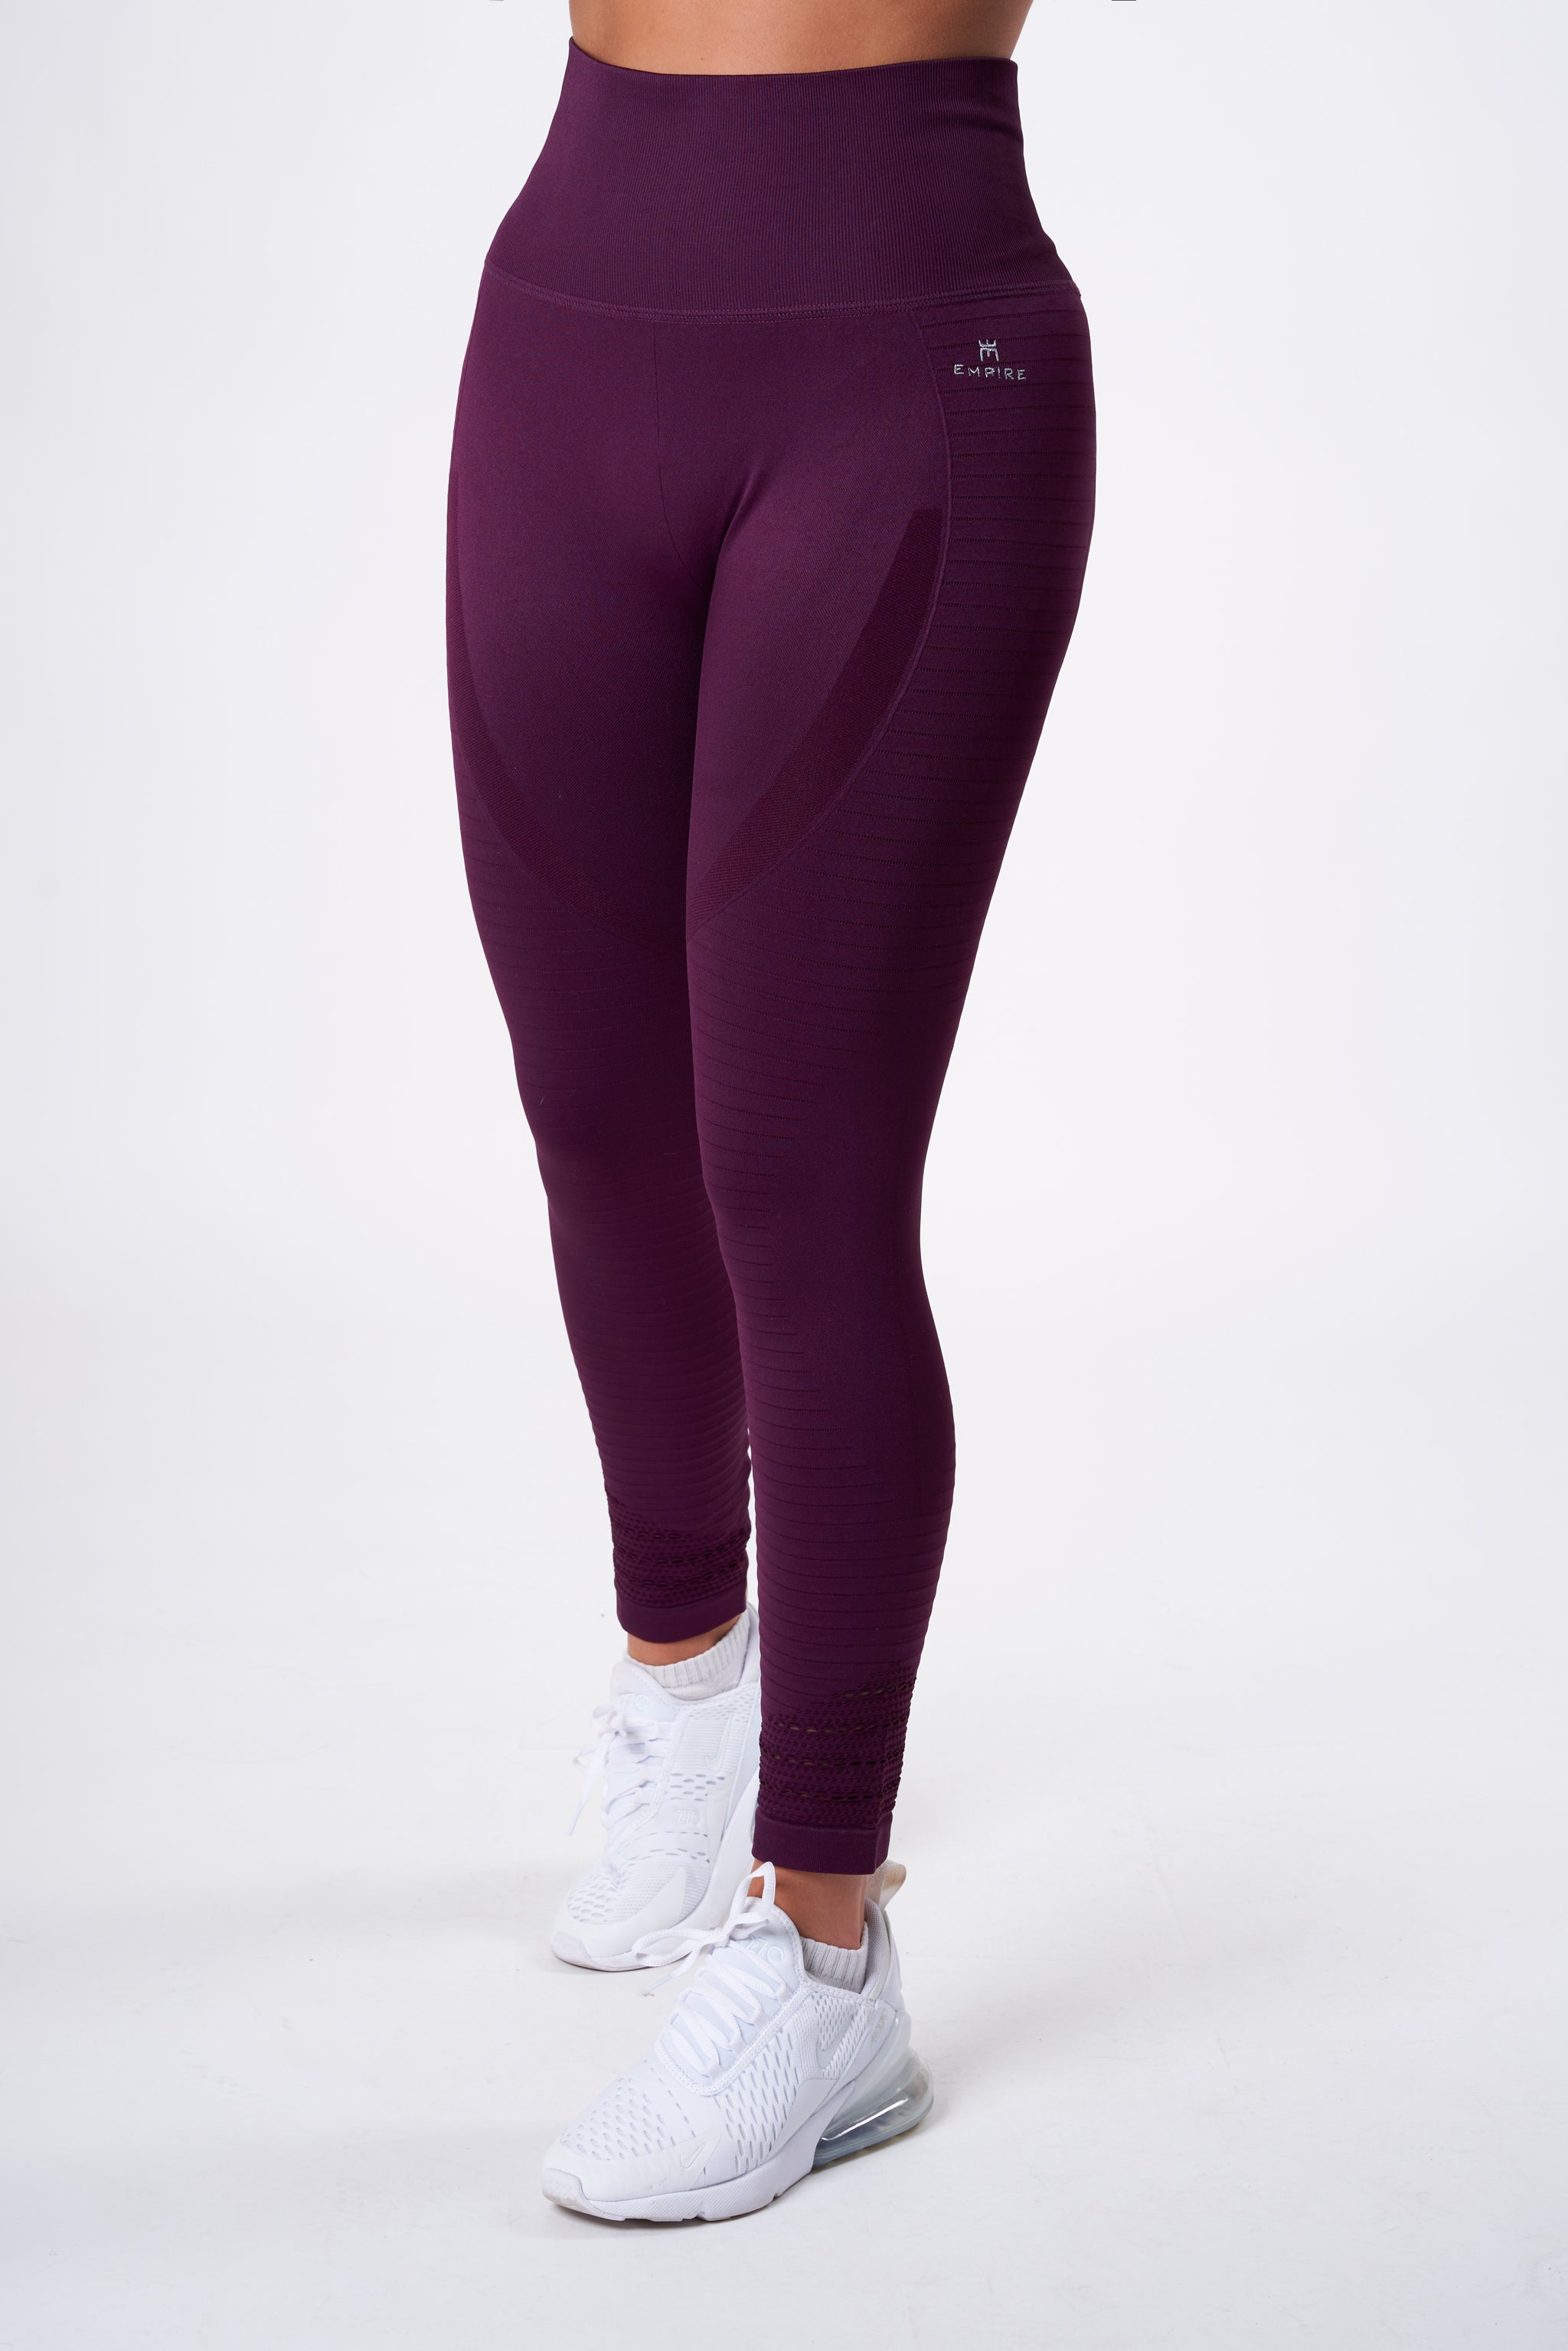 Adore Me Women's Bailey Medium Rise Legging Activewear L / Tulipwood Purple.